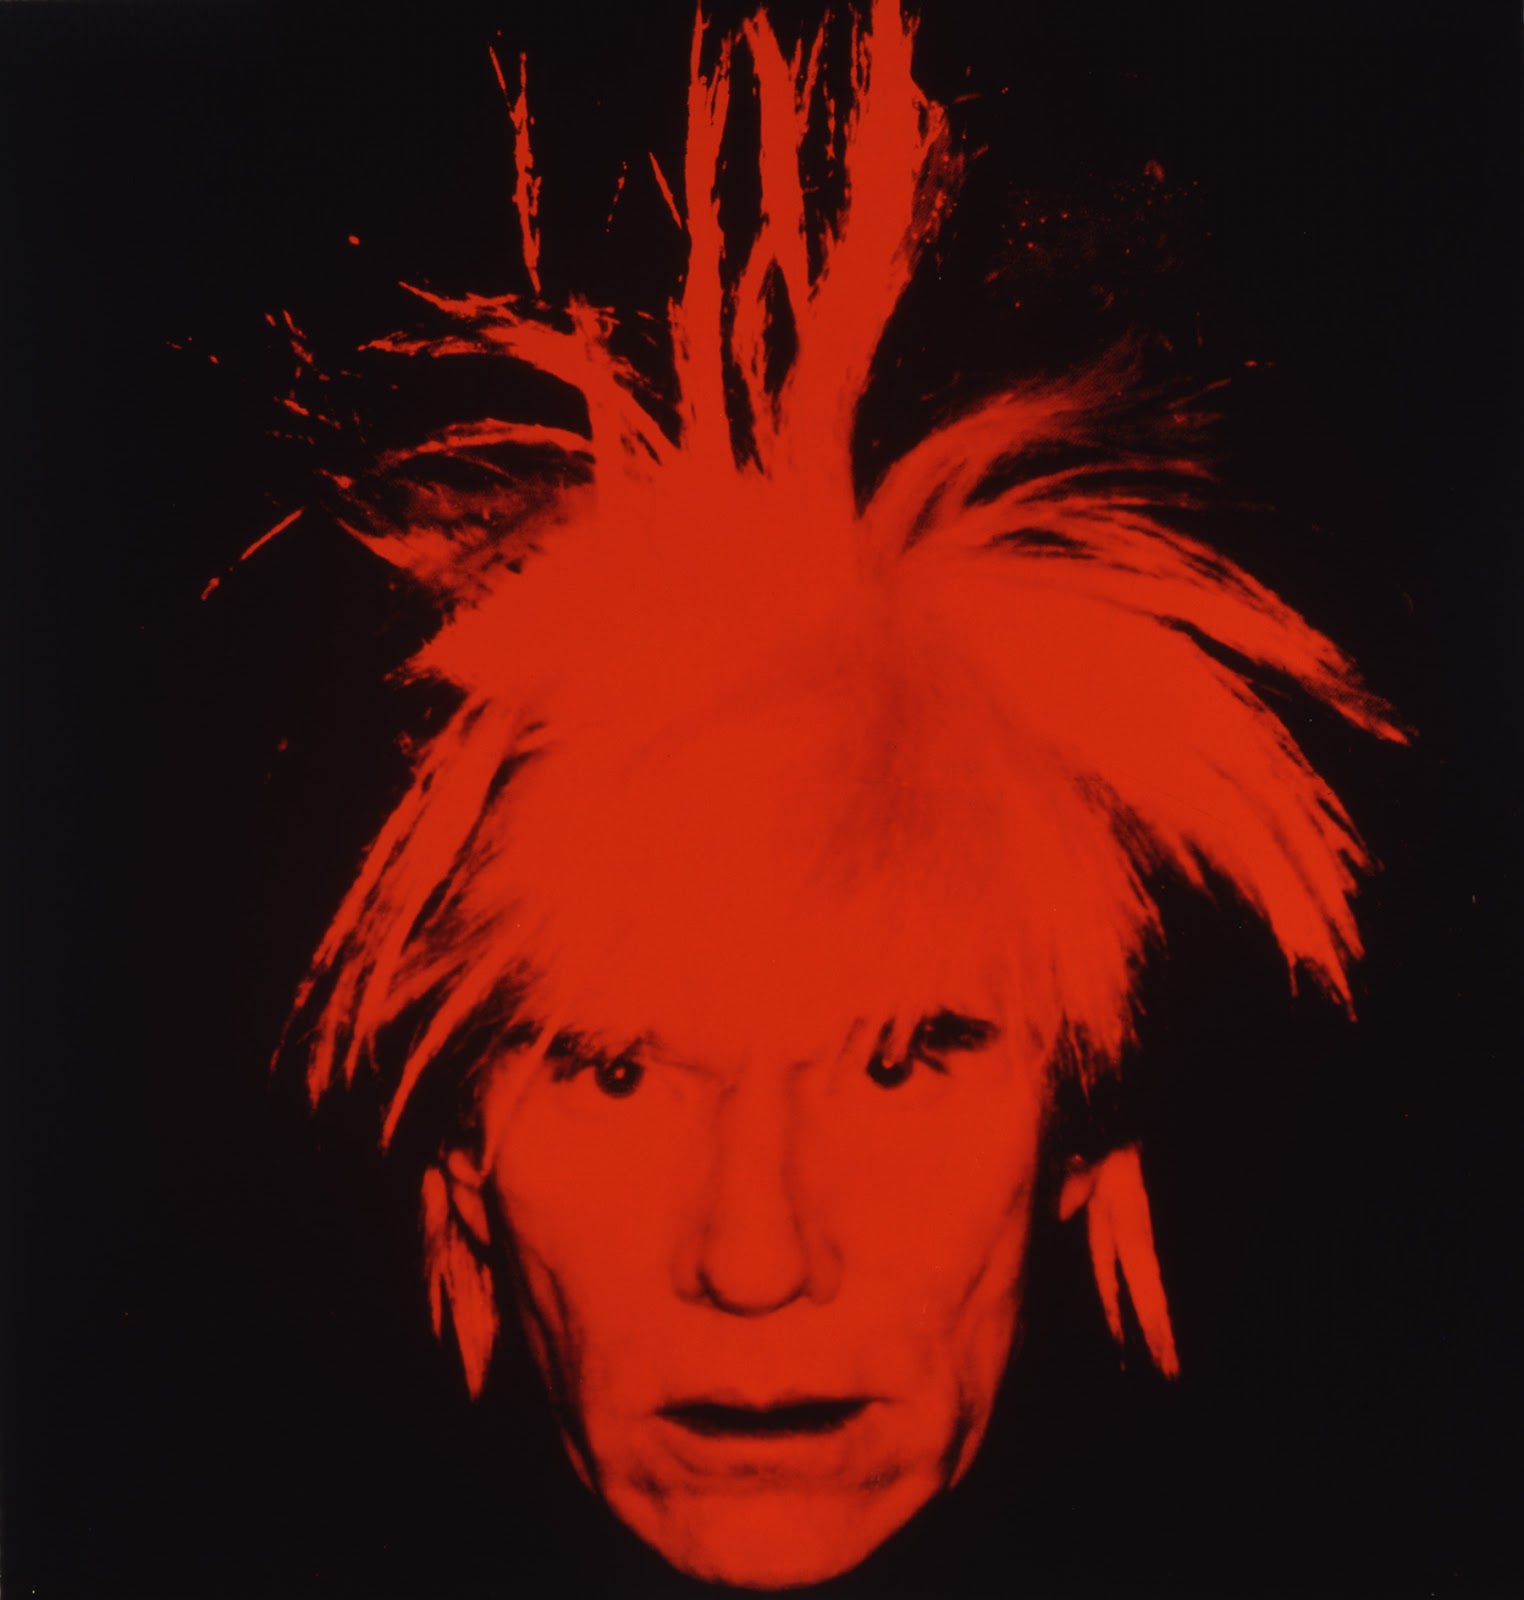 http://1.bp.blogspot.com/-_pZzCKIcOdc/UBT6ZH0WHnI/AAAAAAAAASo/WZNCXTmr_gY/s1600/1_Andy_Warhol_Self-Portrait_1986_300dpi.jpg